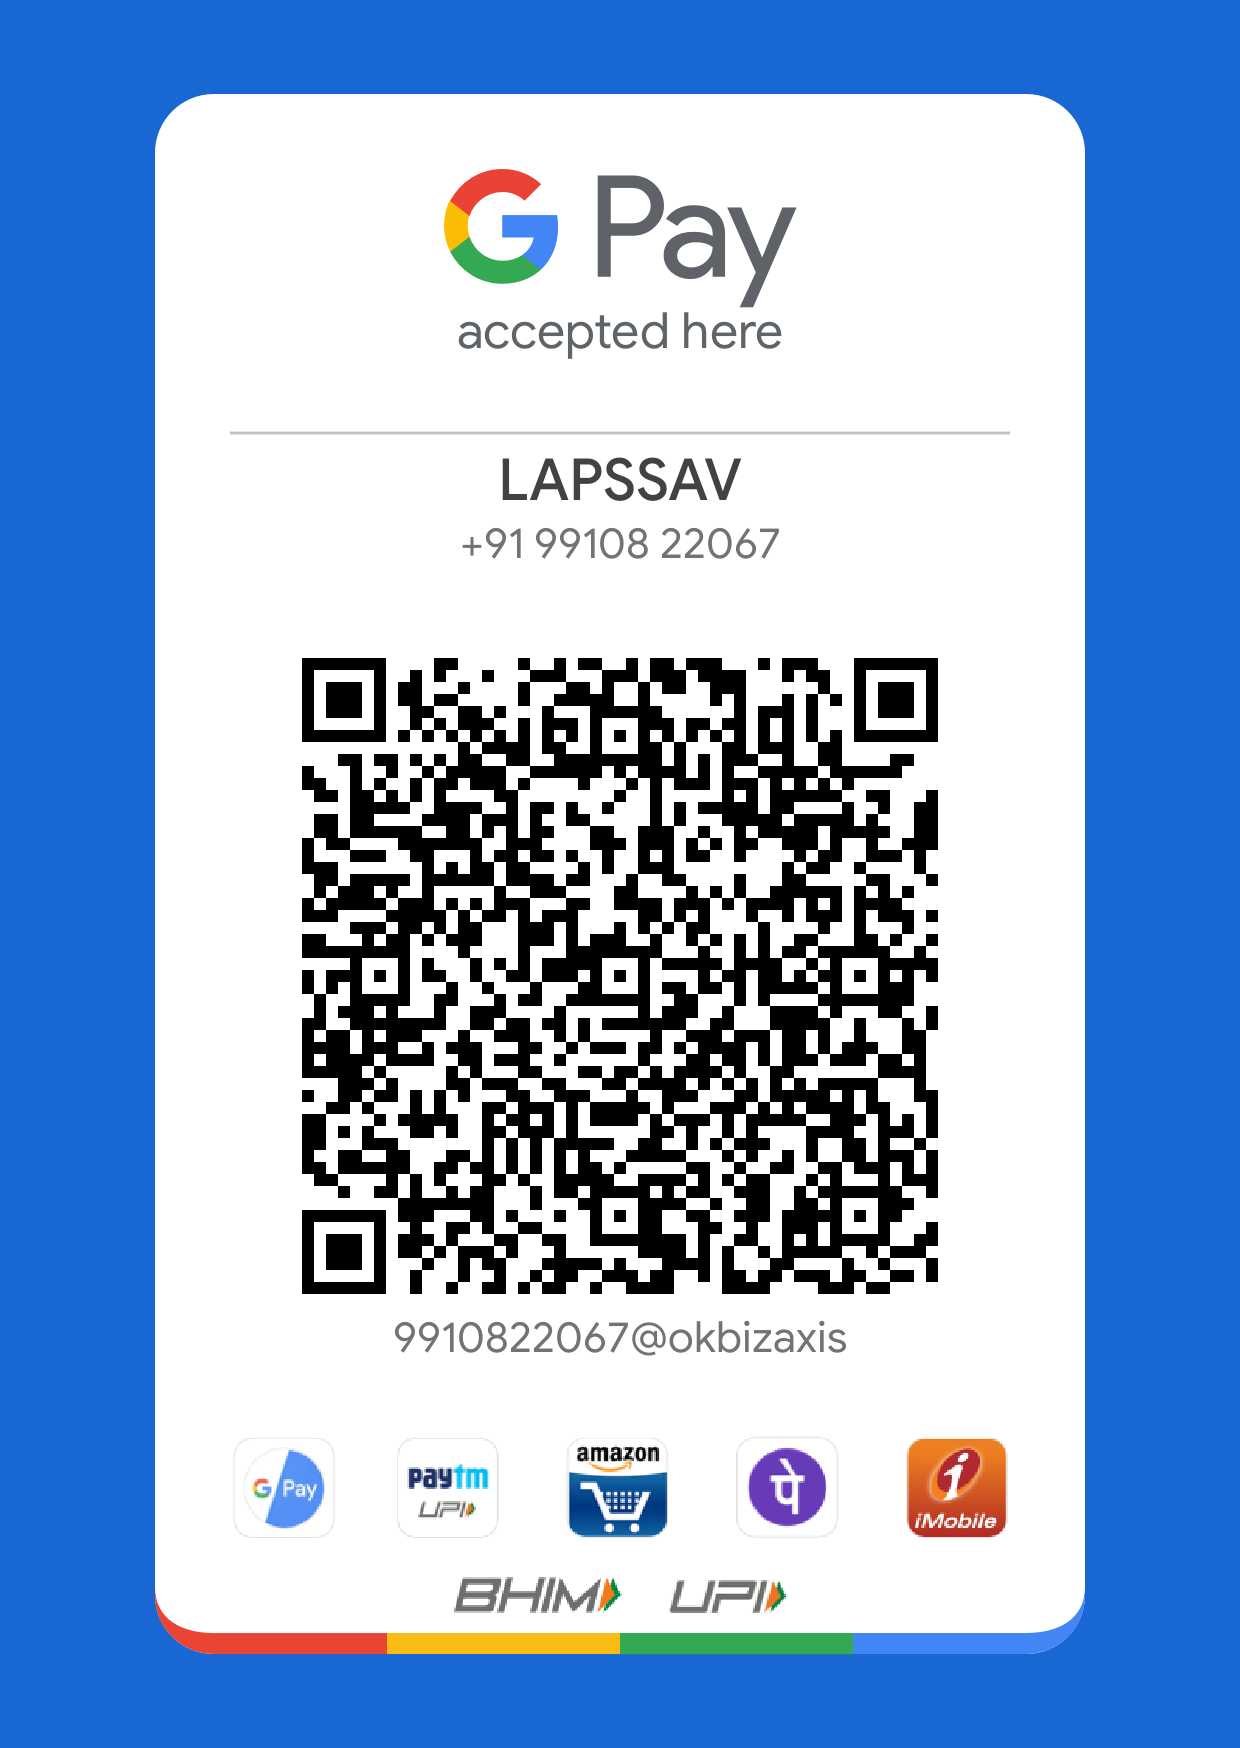 Google Pay payment QR Code